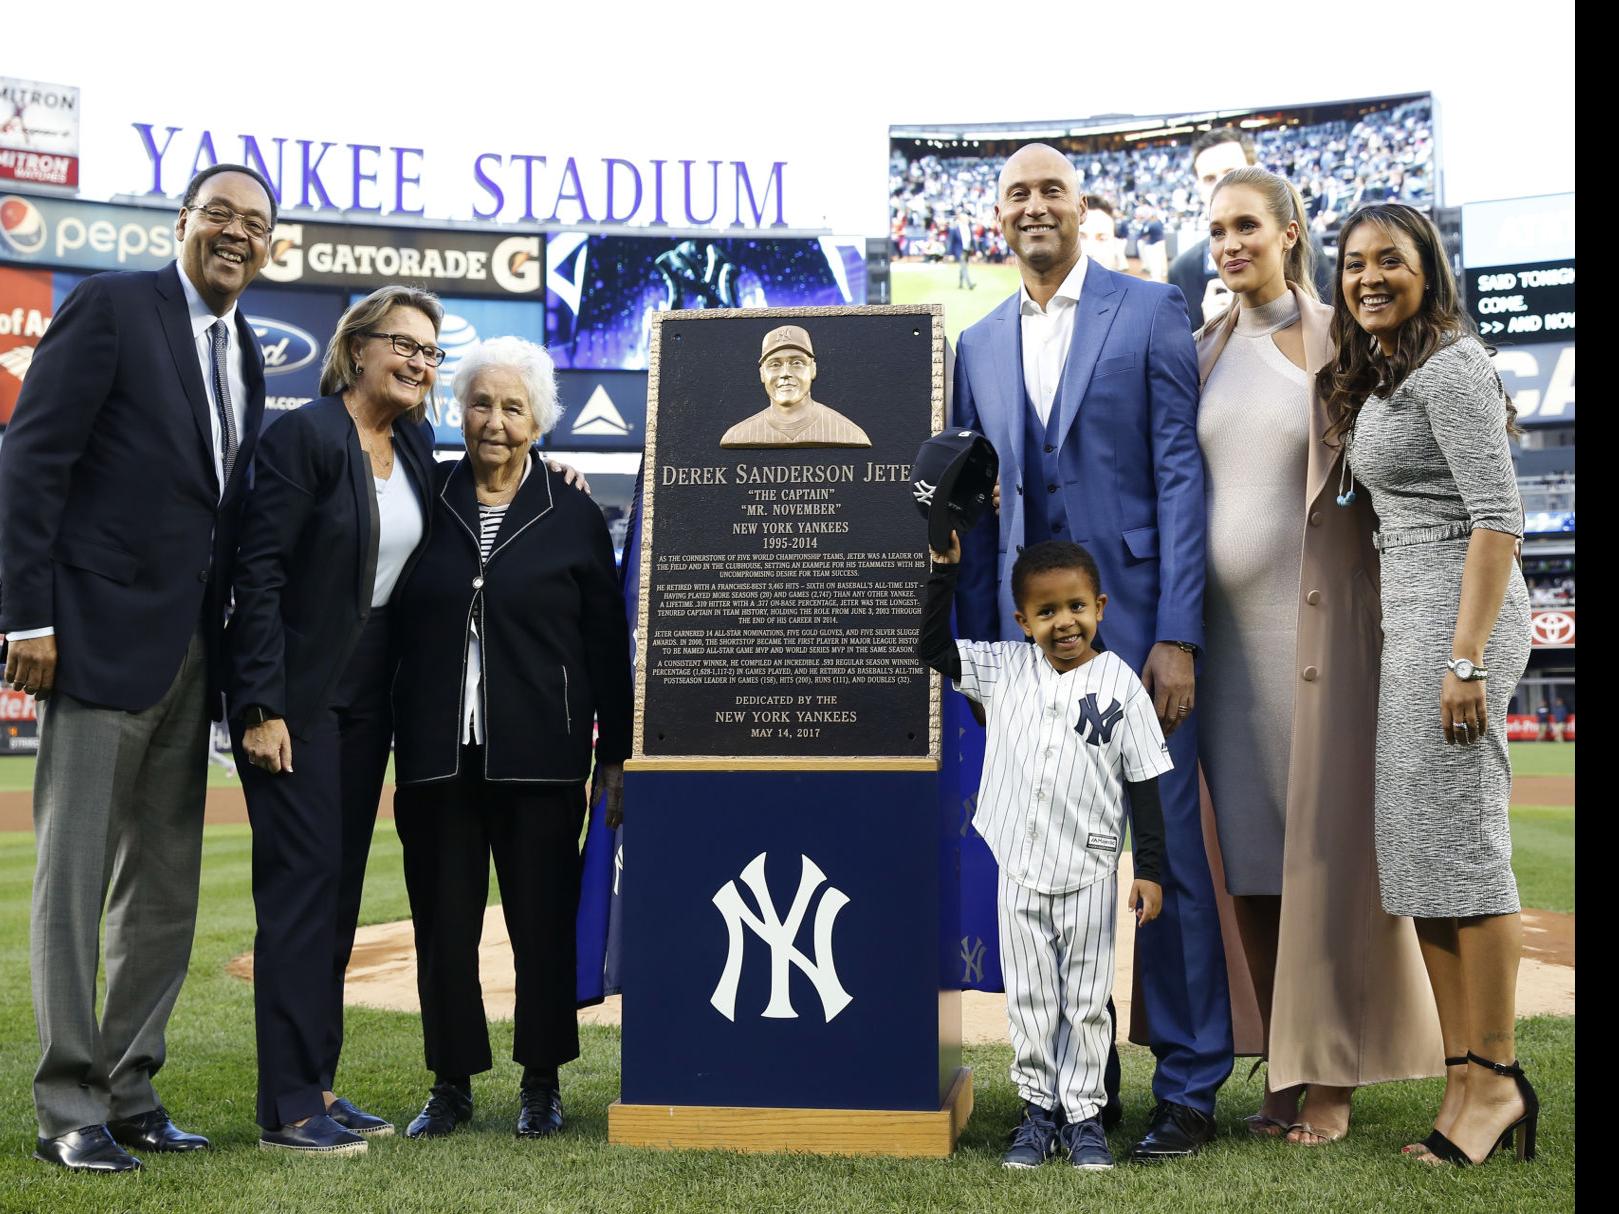 Derek Jeter thanks NYC ahead of Yankees jersey retirement